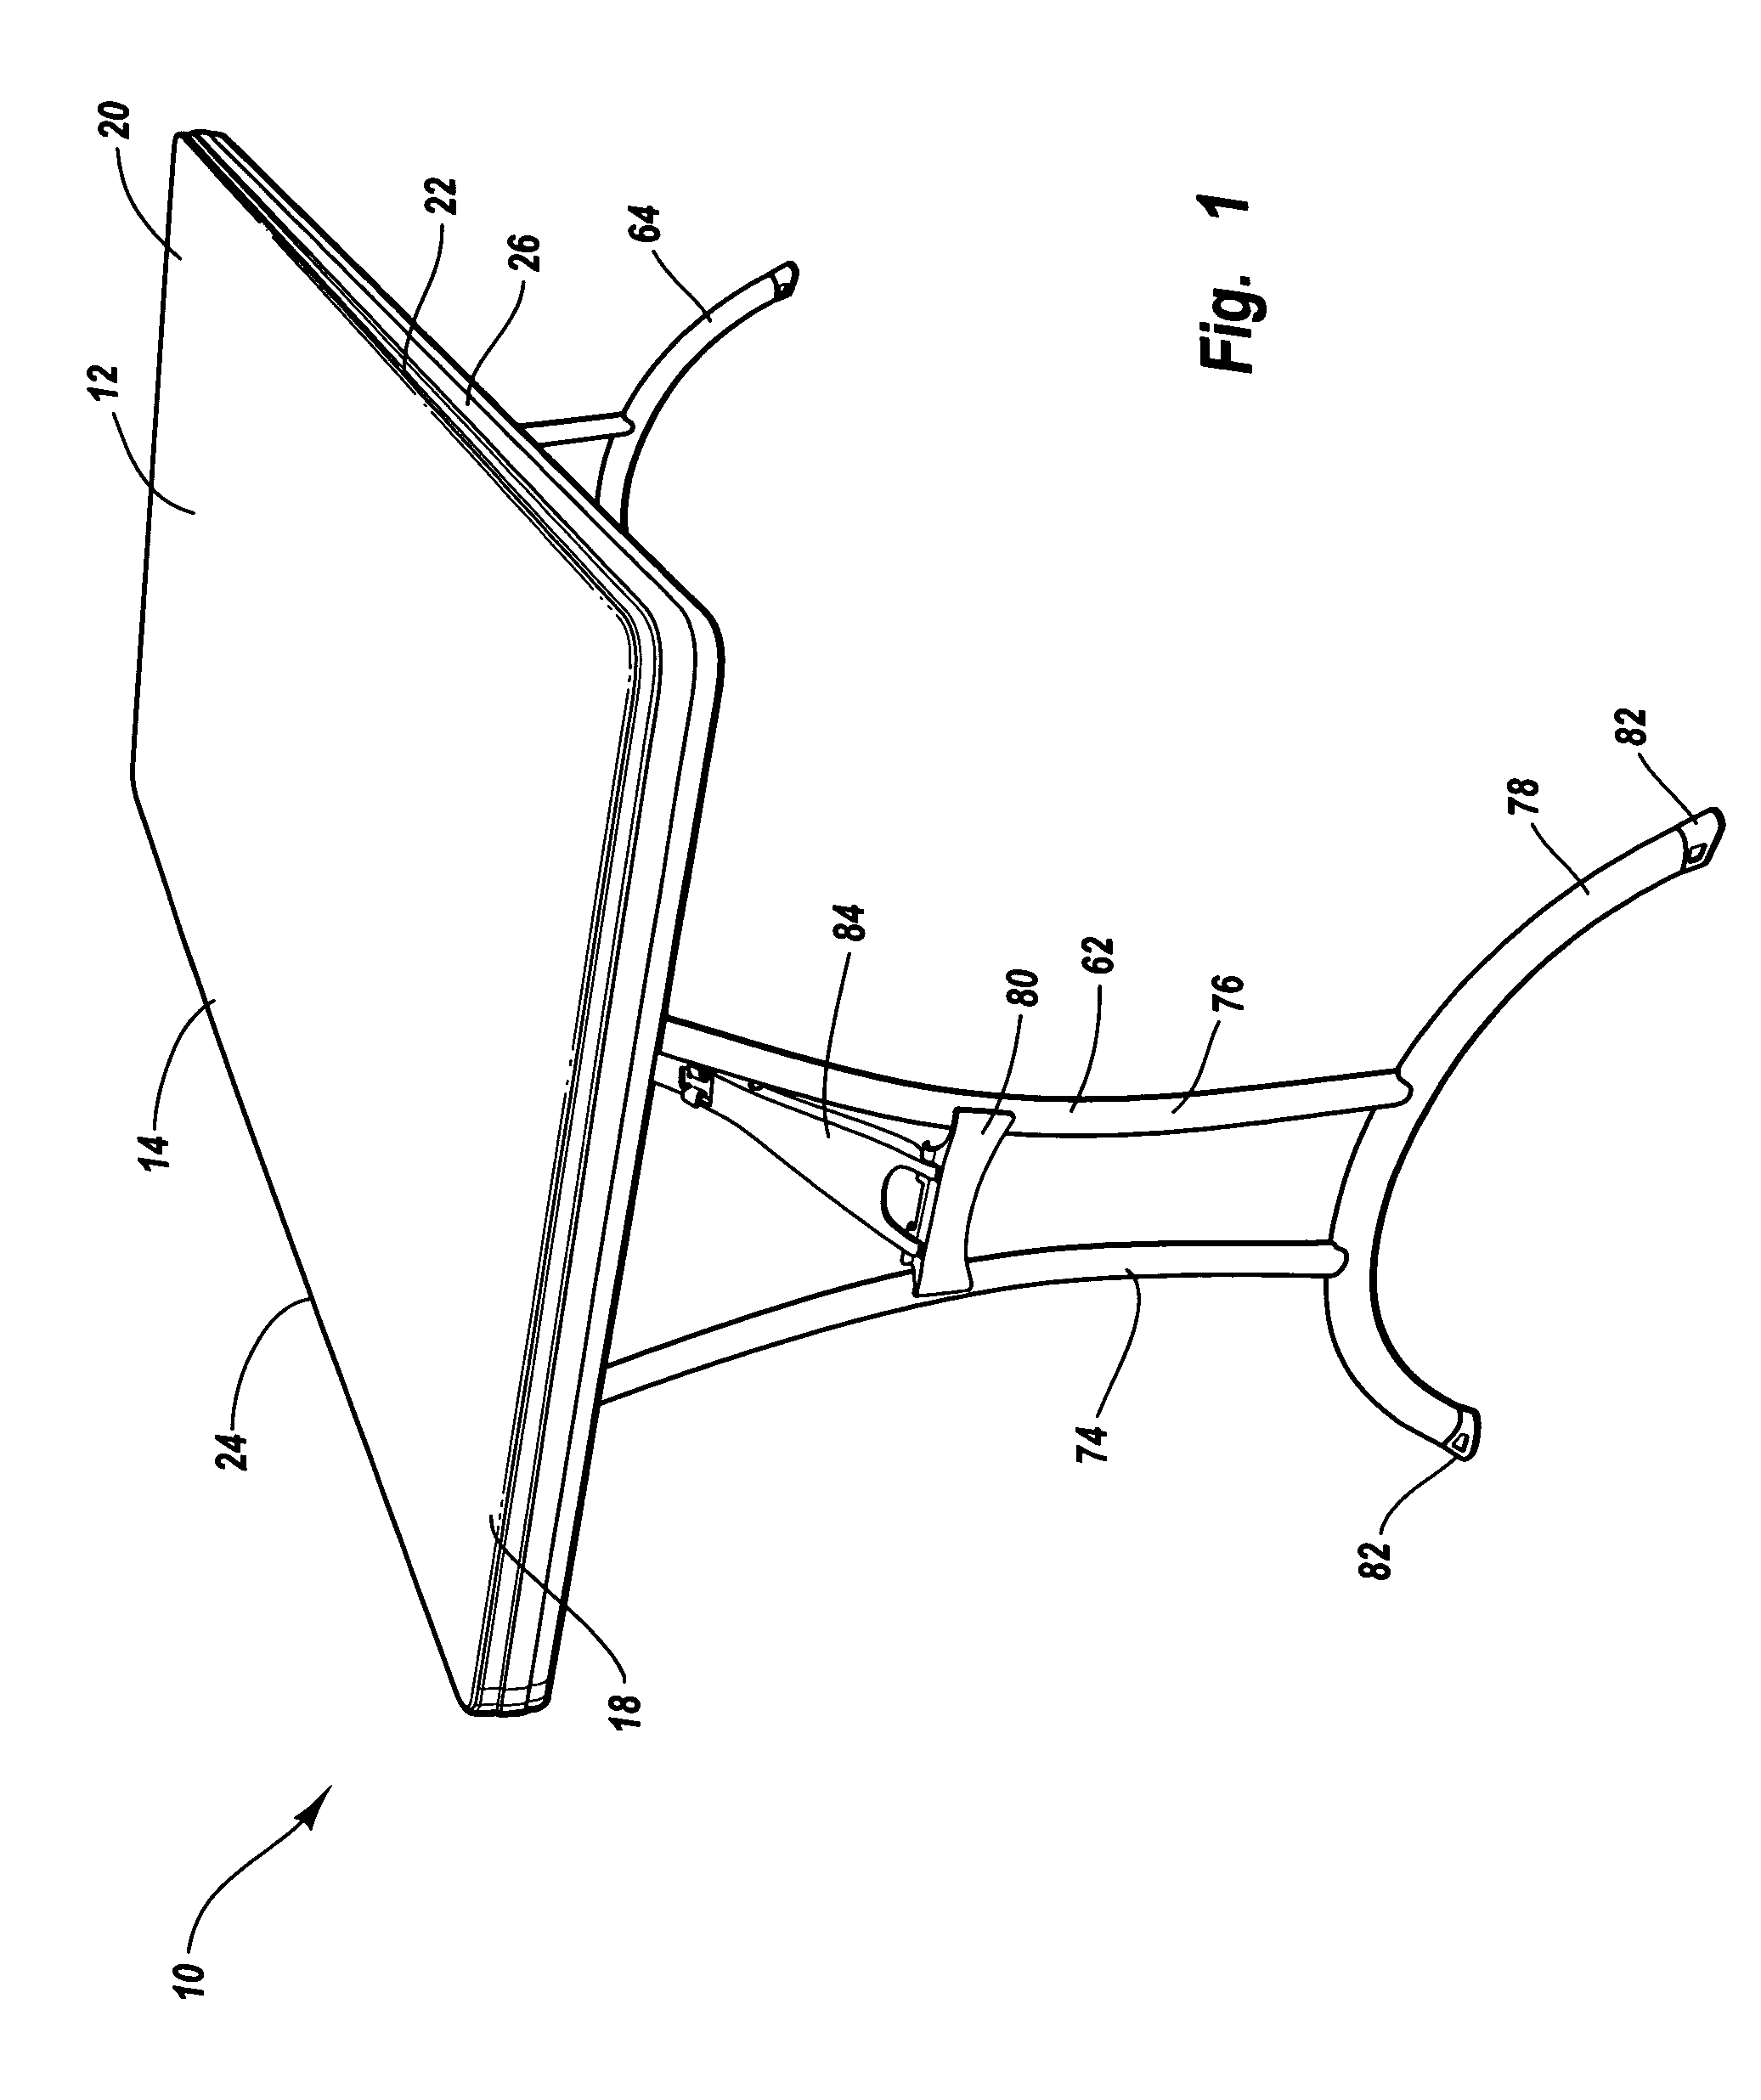 Table leg locking mechanism